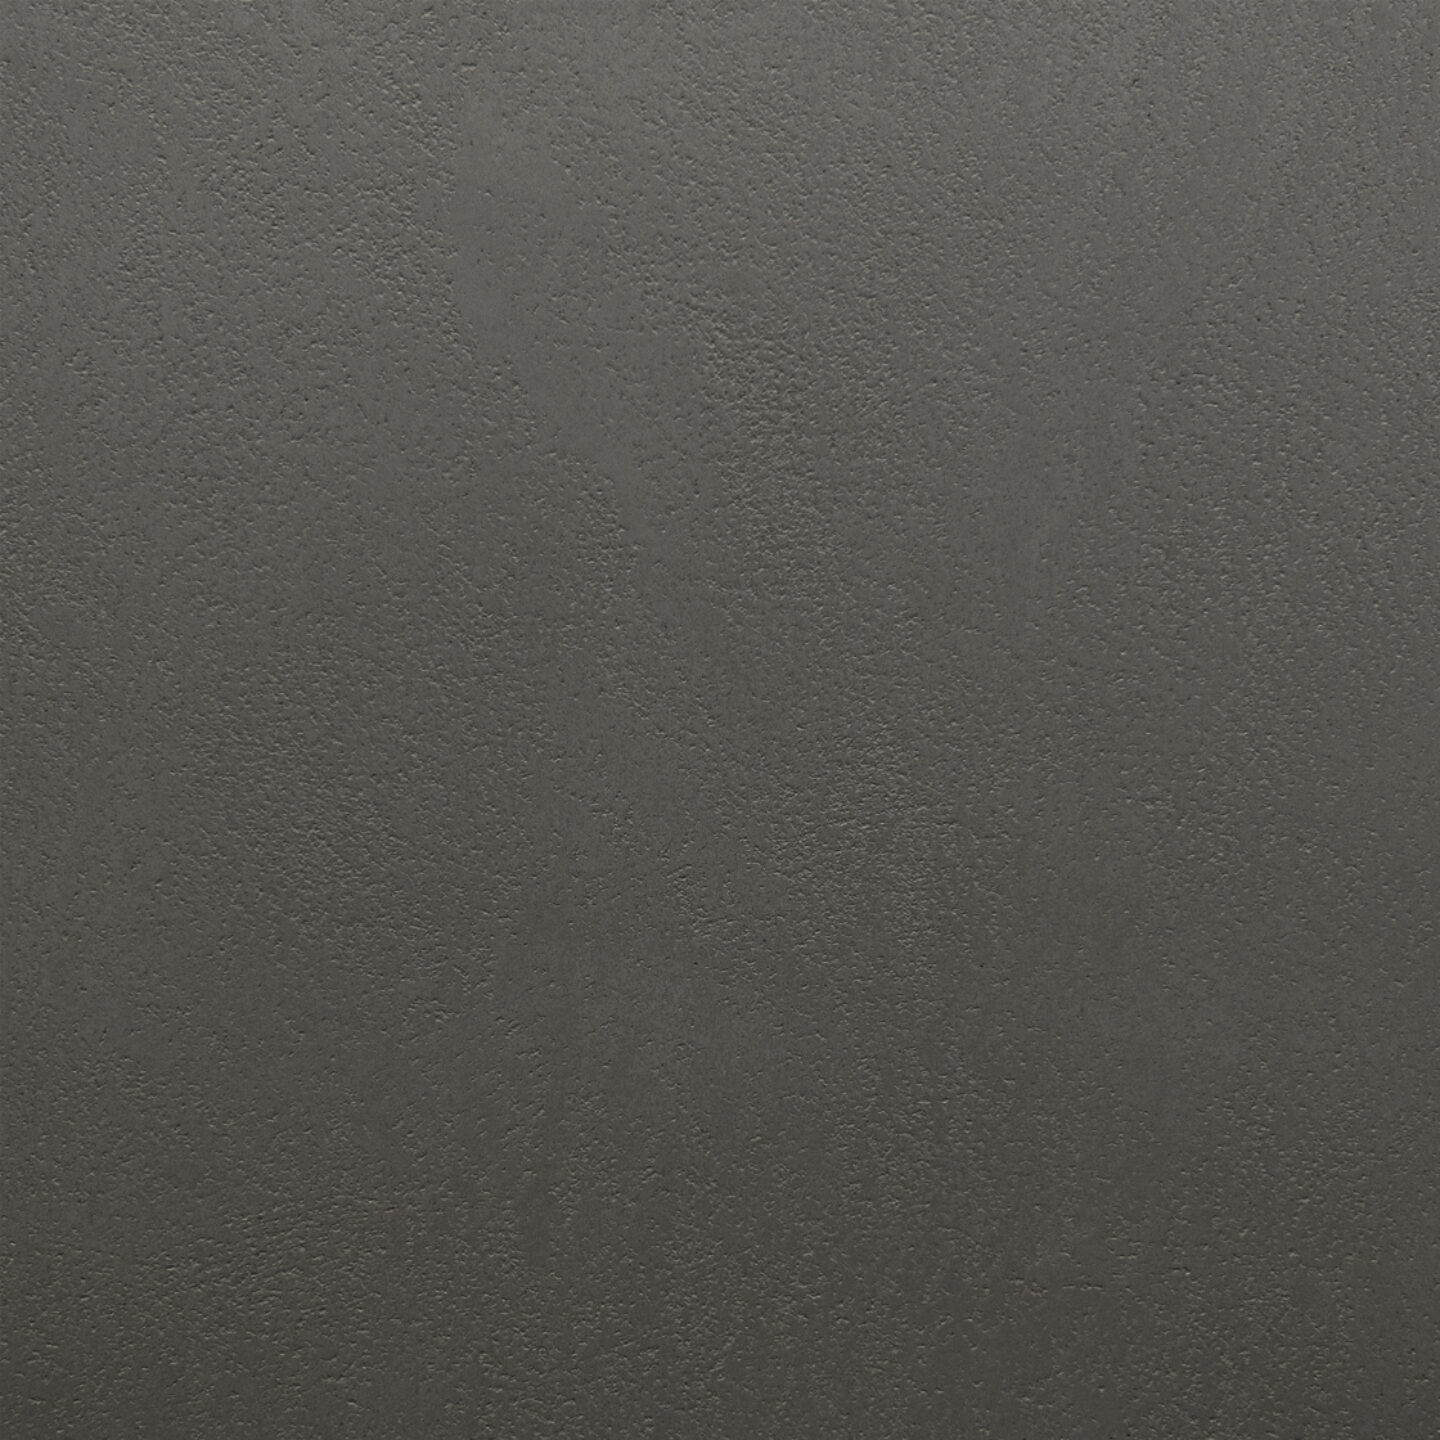 Close up of Armourcoat leatherstone exterior polished plaster finish - 42